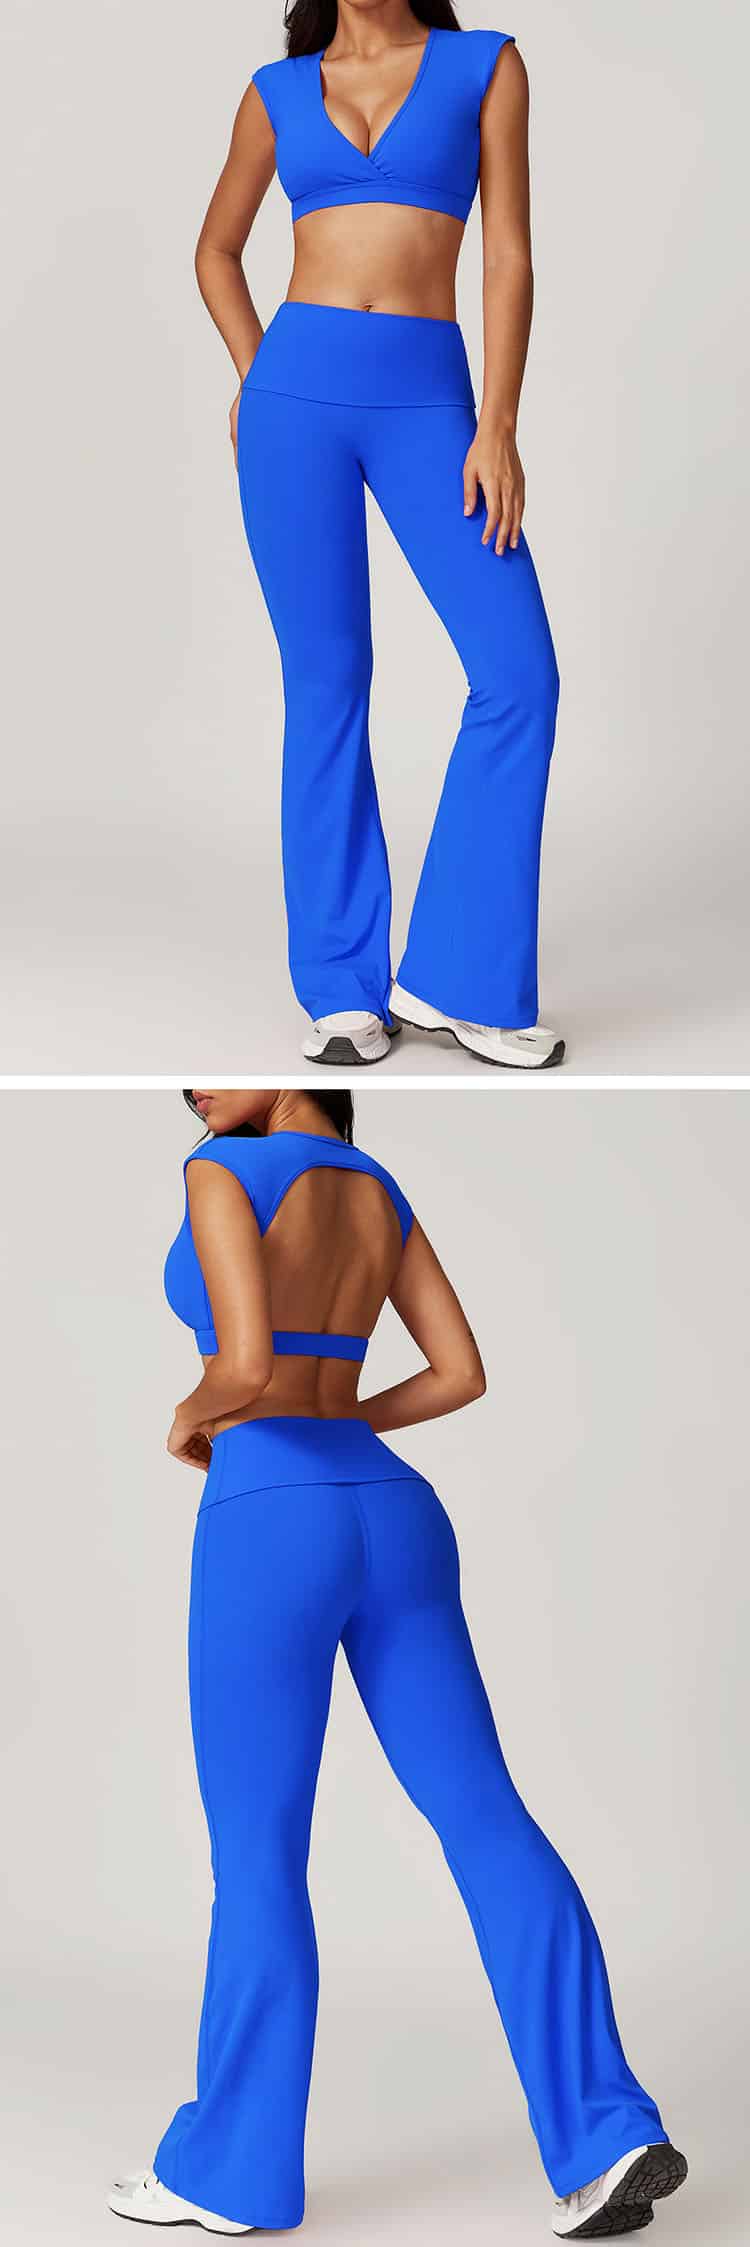 Colorfulkoala leggings modify the shape of the legs and highlight the buttocks